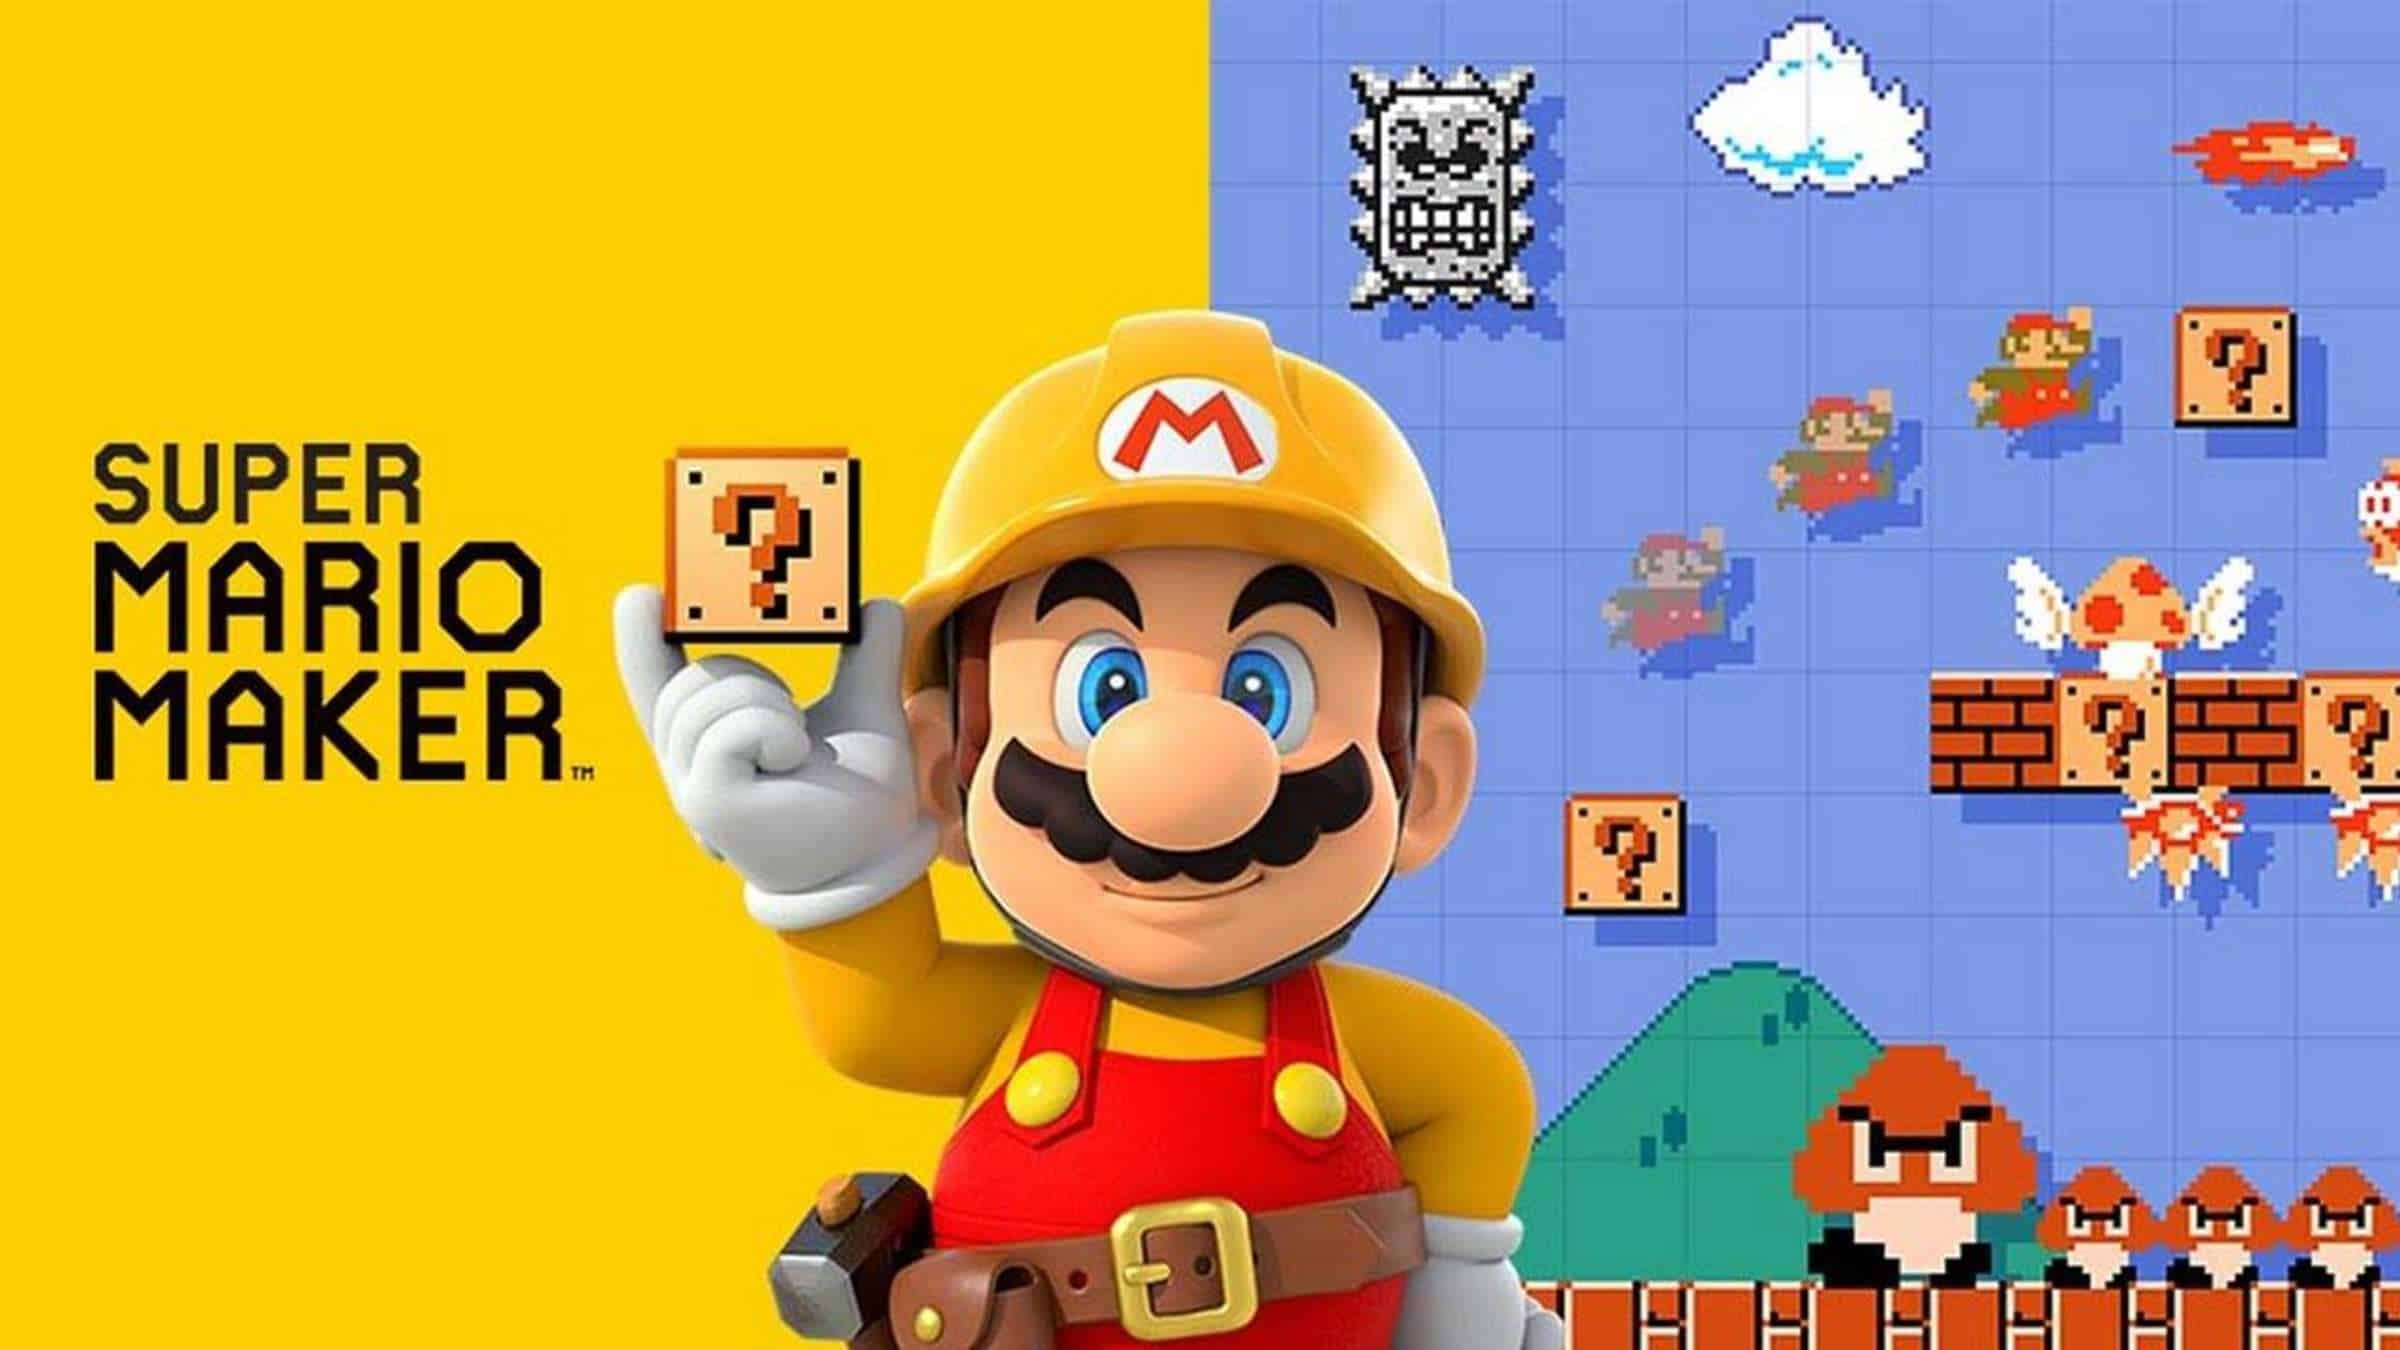 Best Super Mario Games - Super Mario Maker